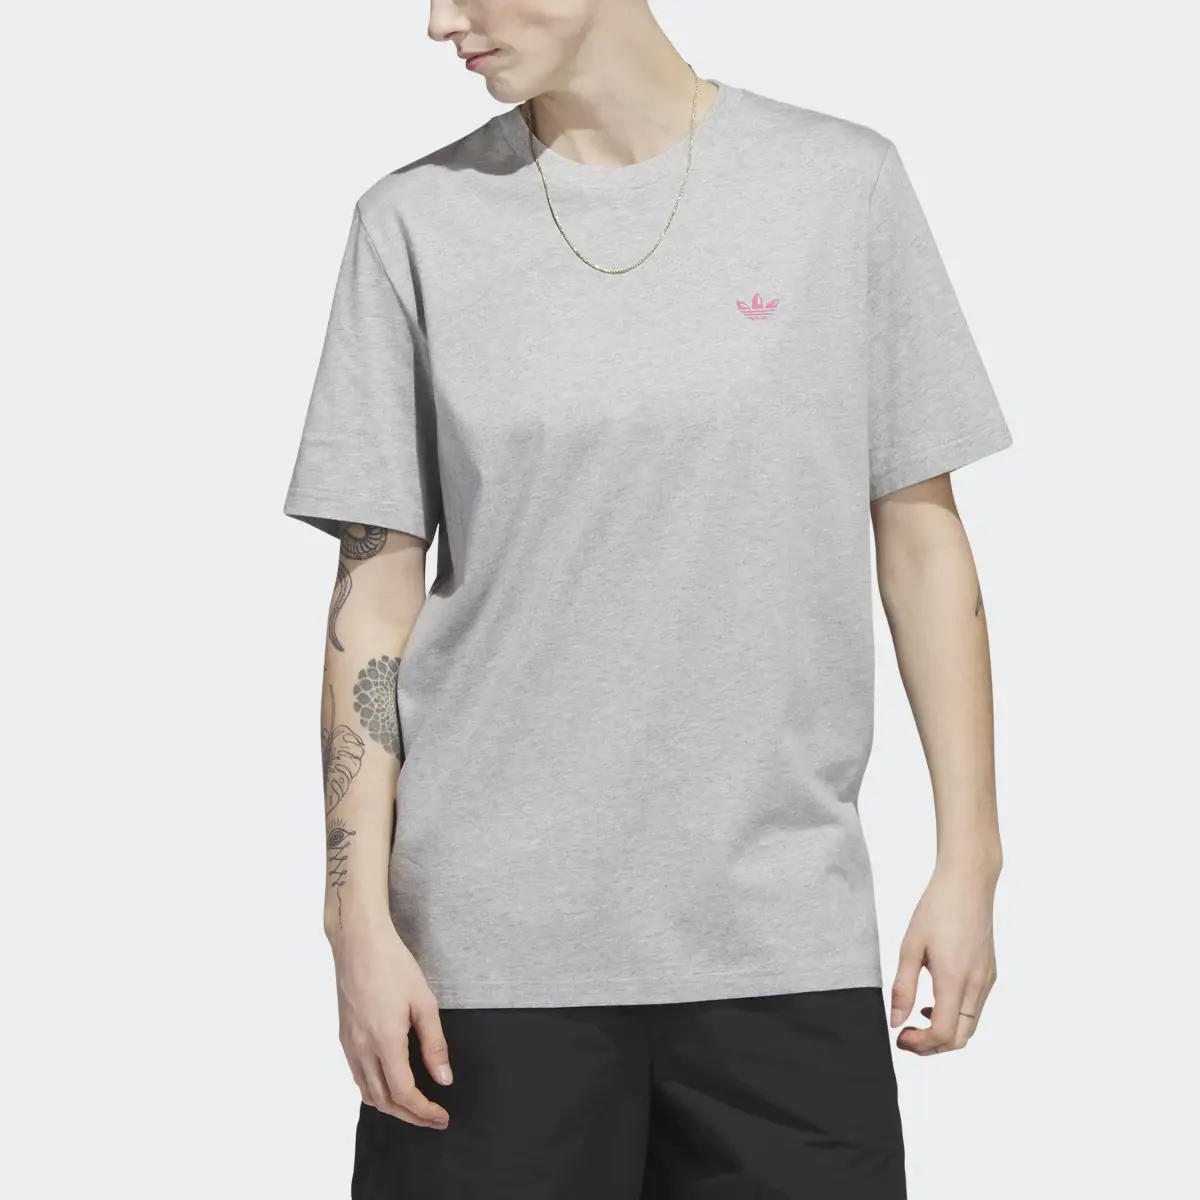 Adidas T-shirt 4.0. 1